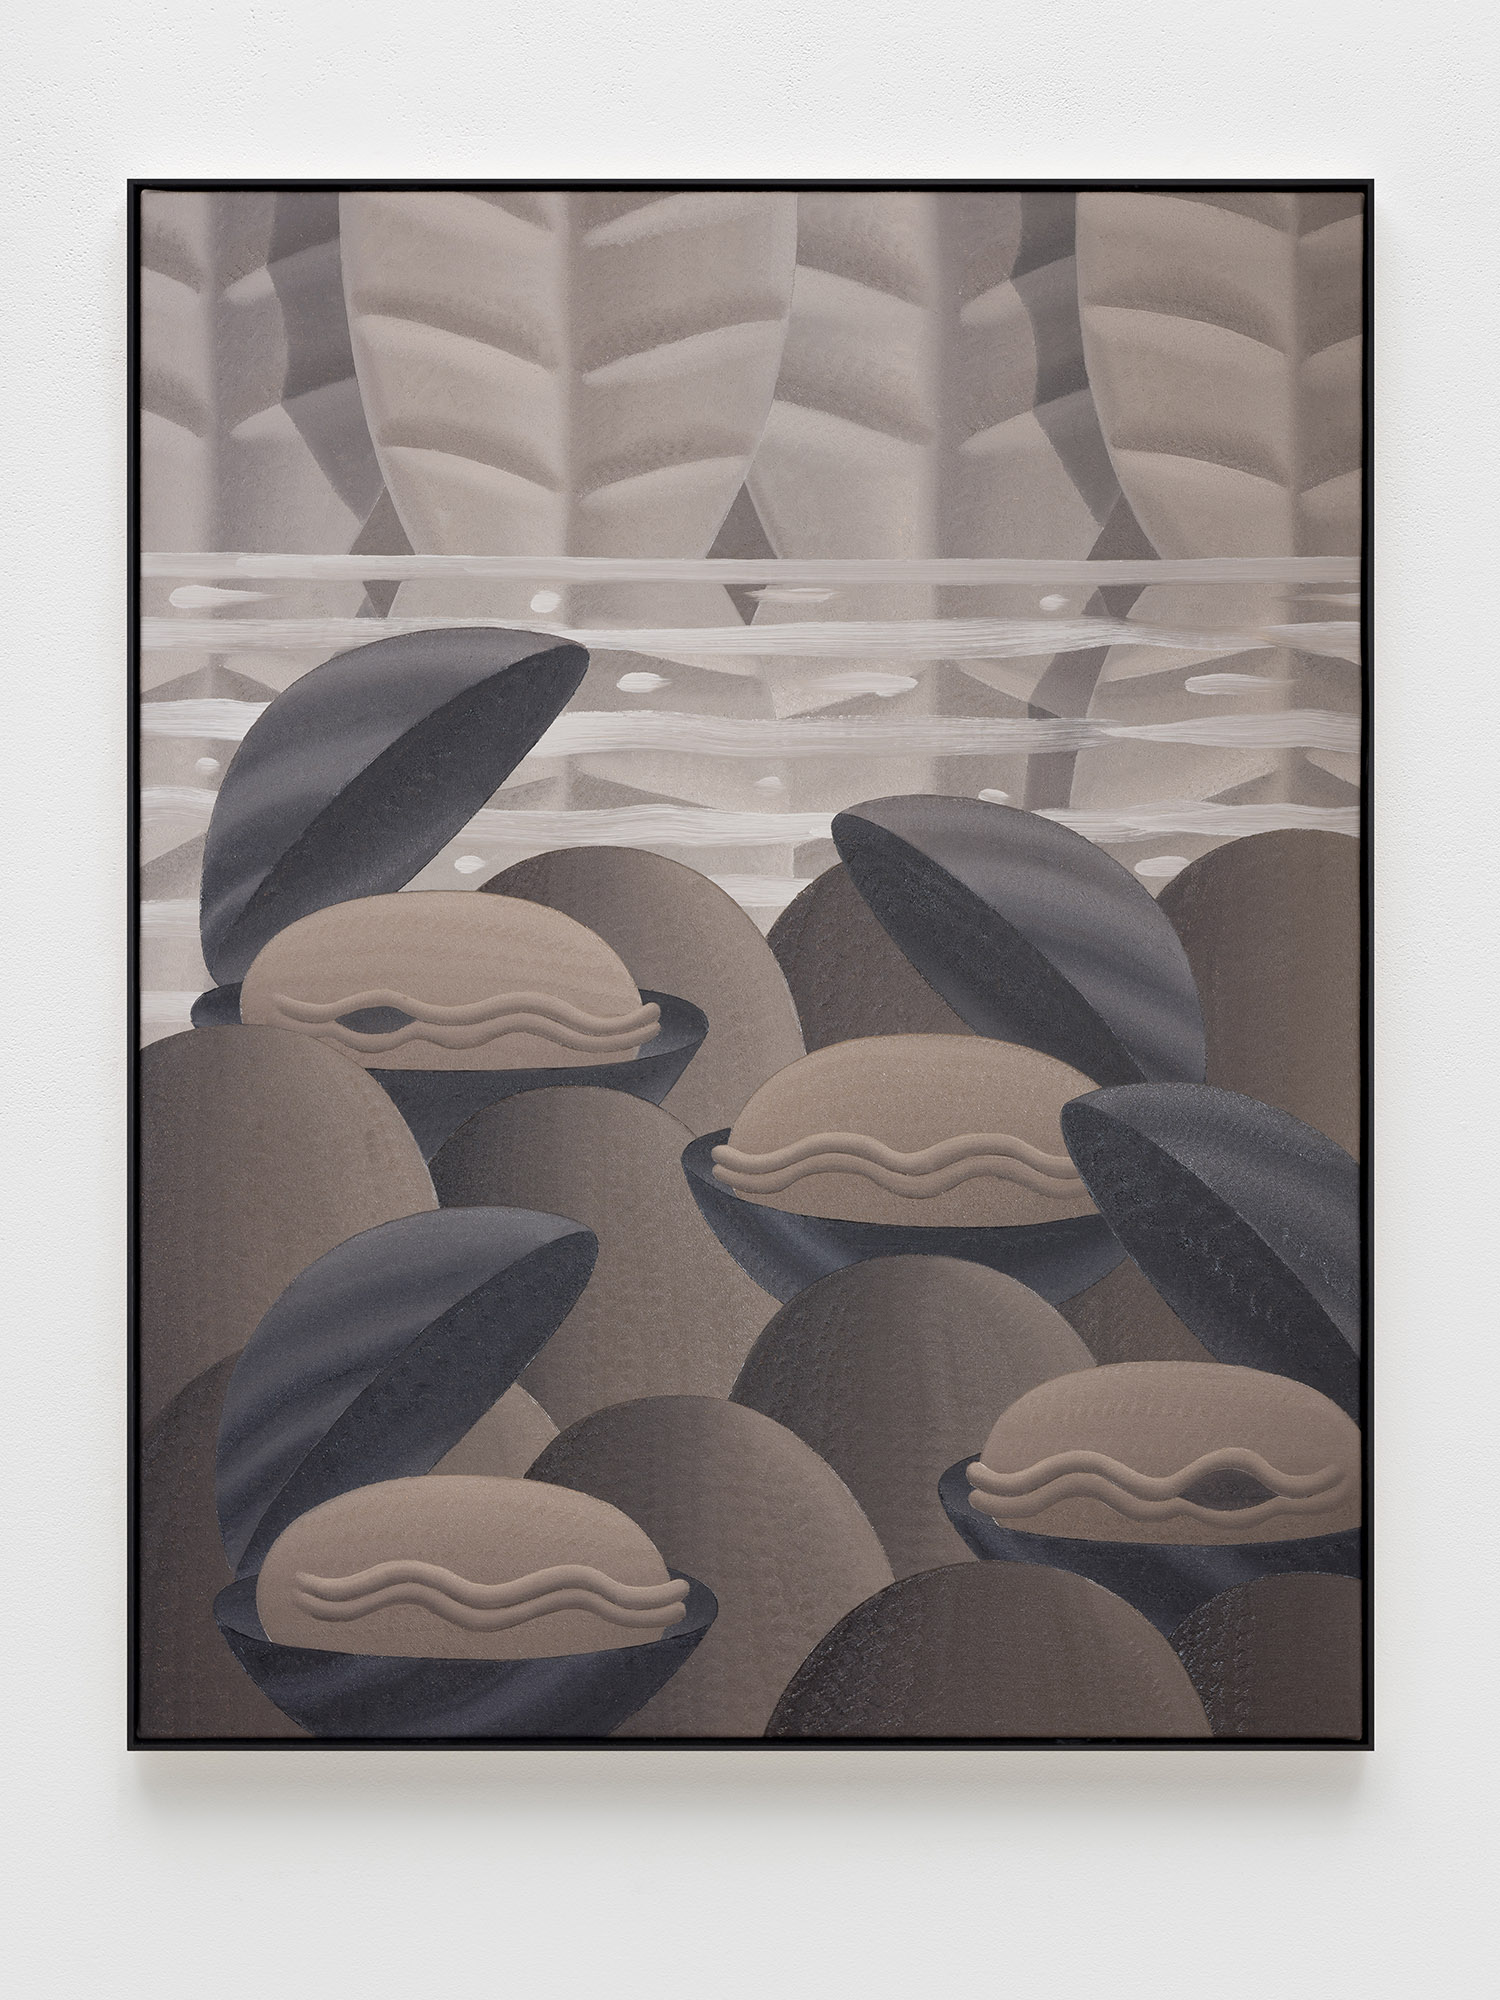 Laurens Legiers, resting mussels, 2021, oil on canvas, 120 x 95 cm